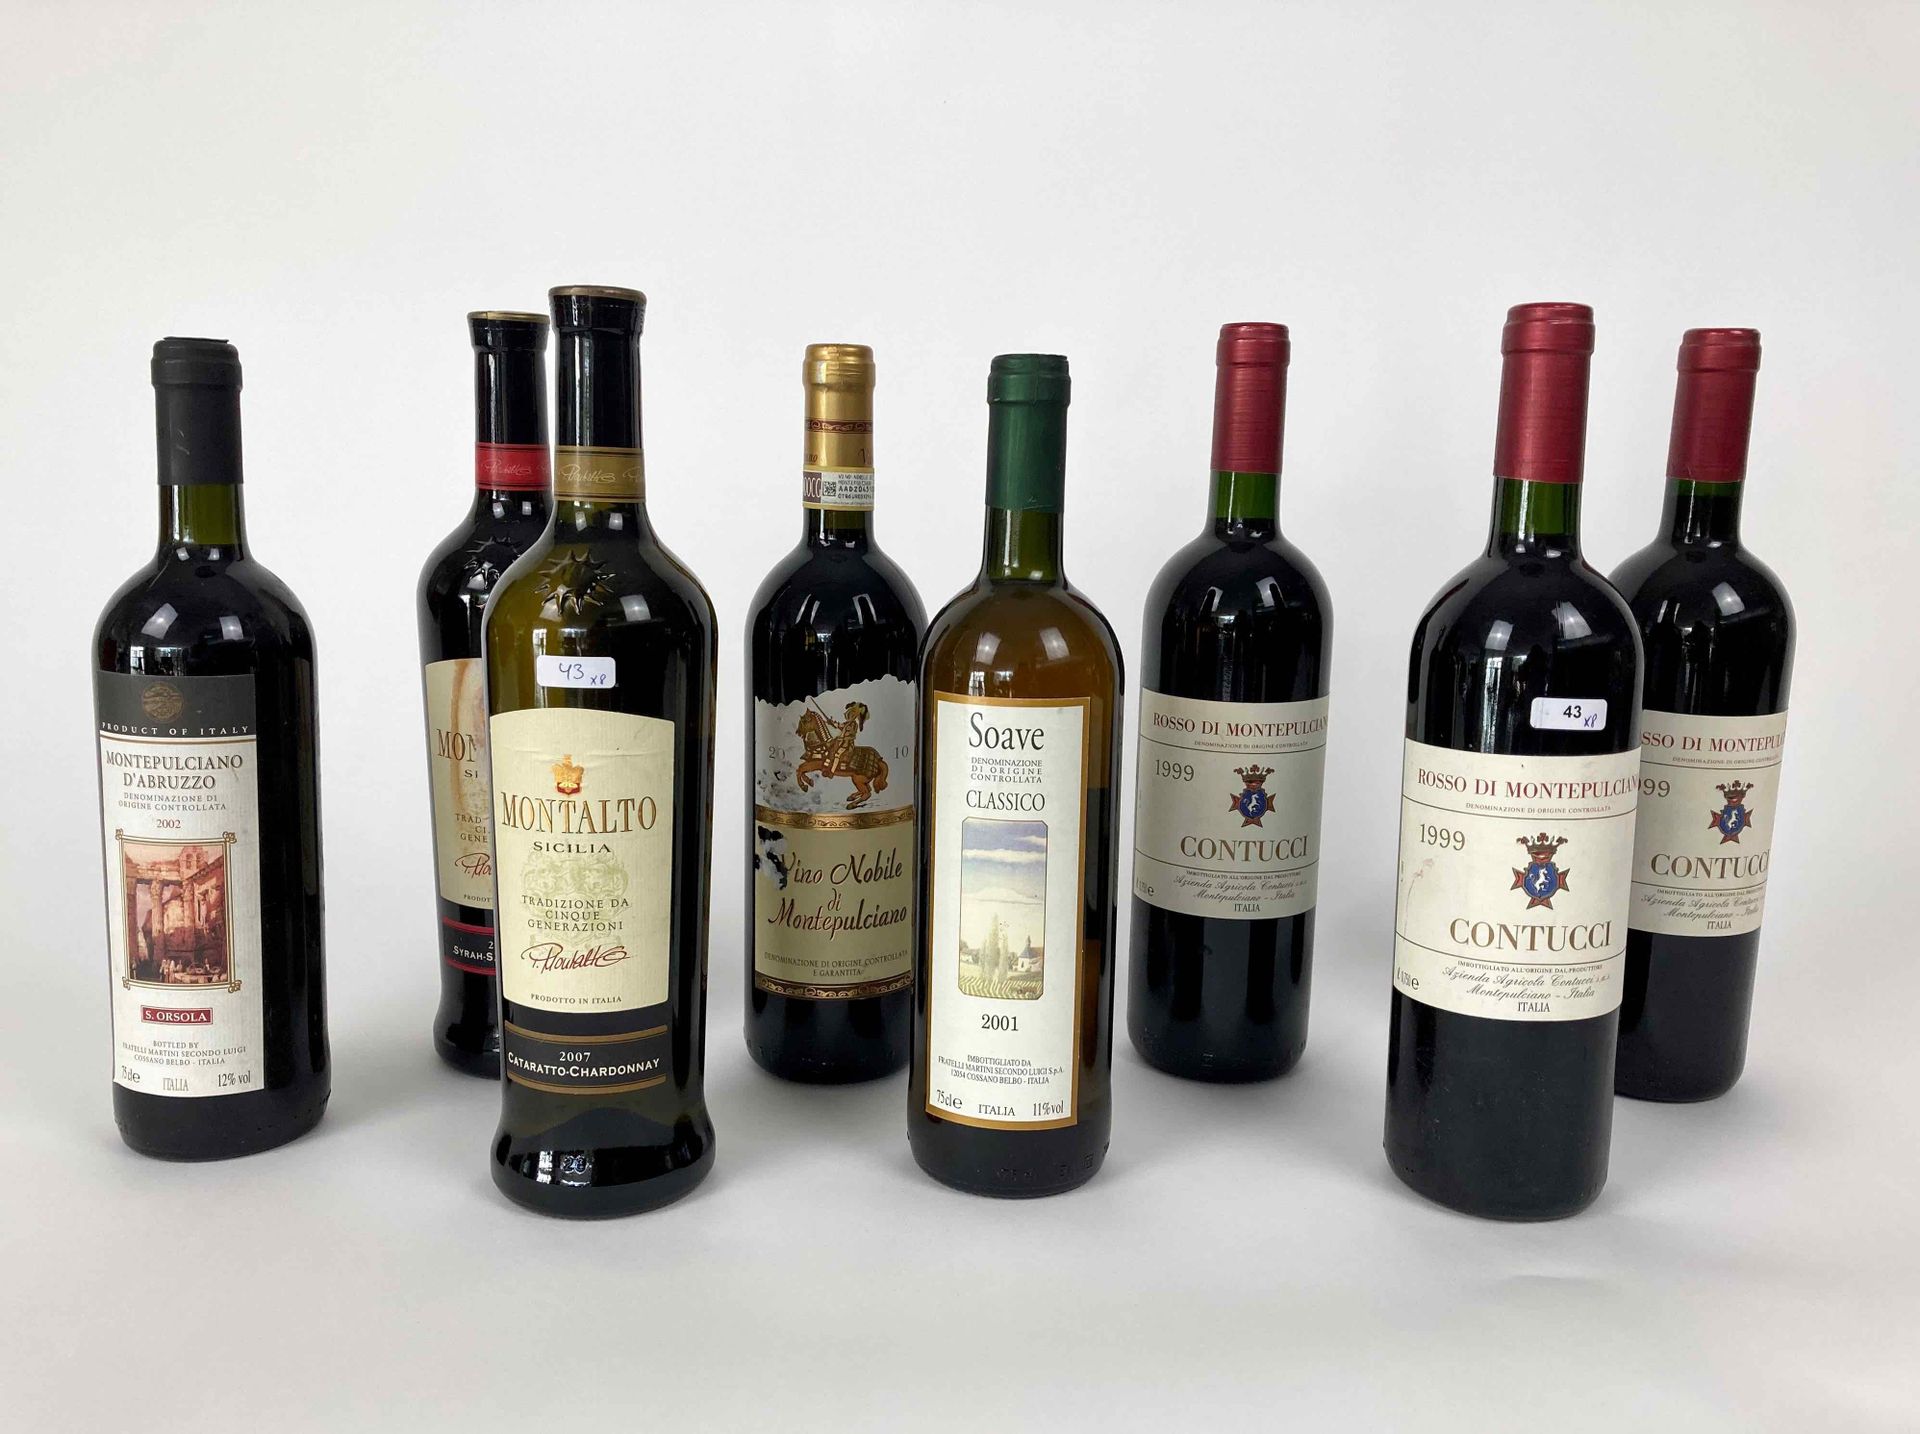 ITALIE Lot de huit bouteilles :

- Contucci - Rosso di Montepulciano 1999 (rouge&hellip;